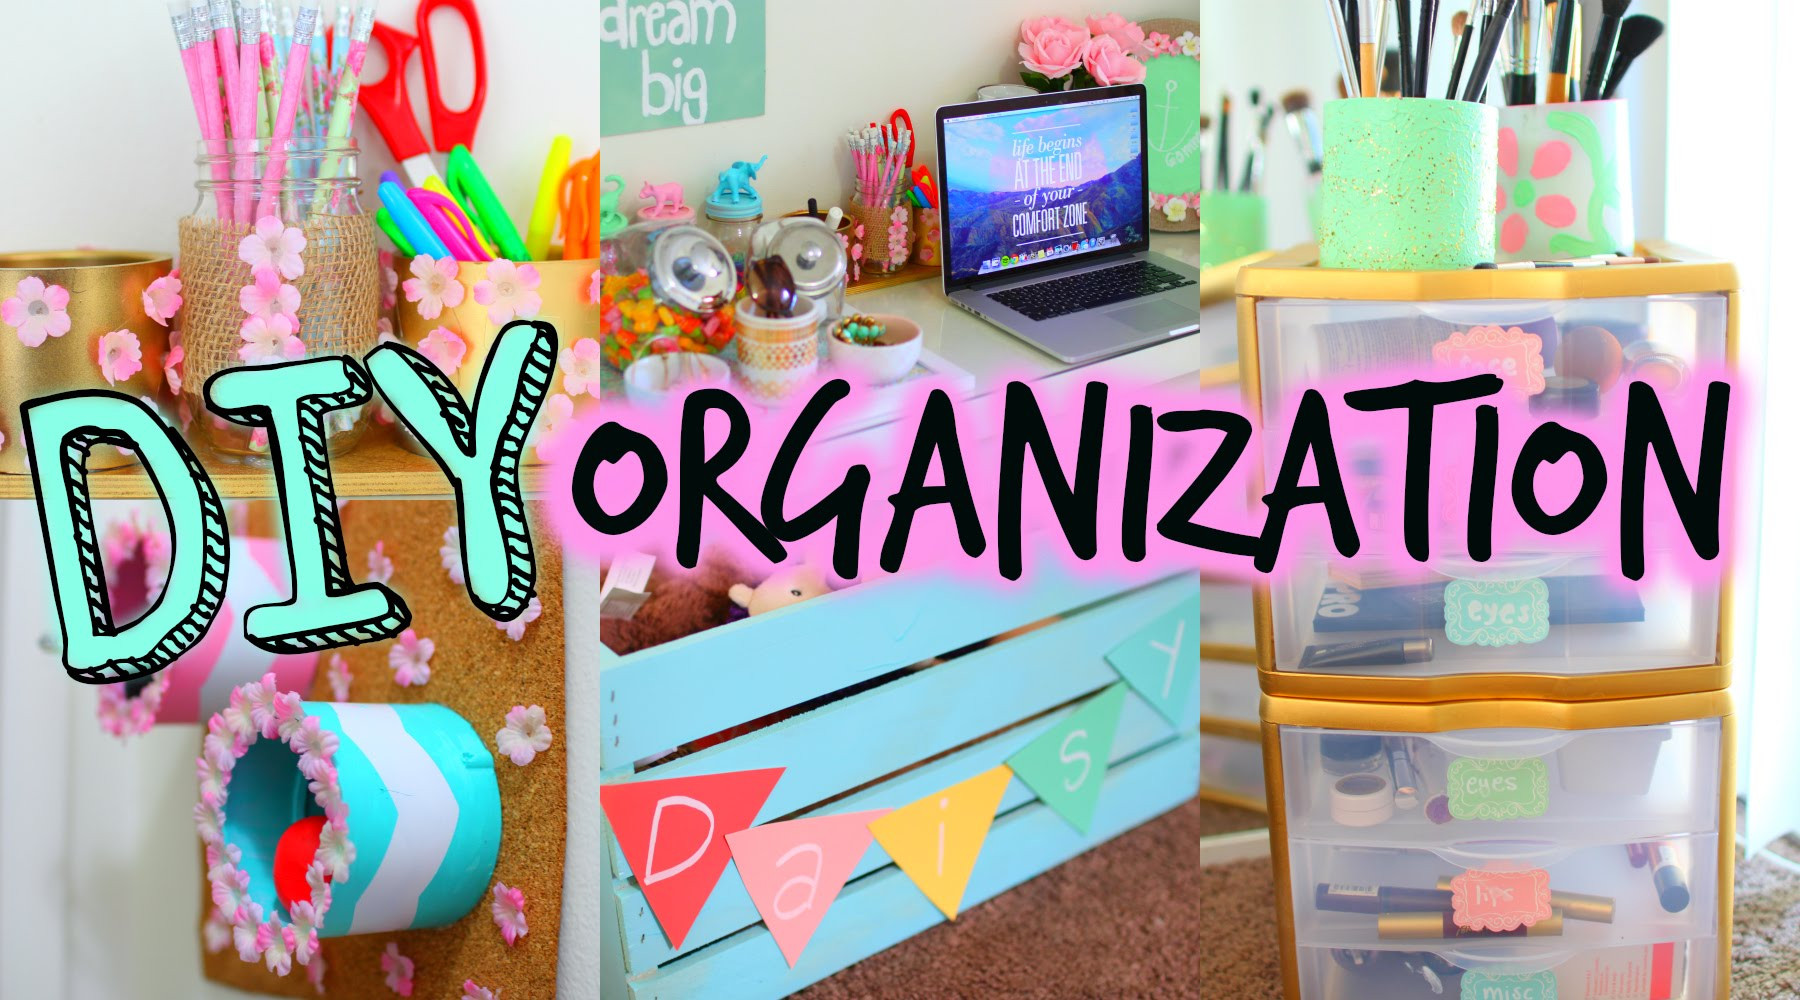 Best ideas about Room Organizer DIY
. Save or Pin Diy Room Decor Sara Beauty Corner Gpfarmasi 5da32e0a02e6 Now.